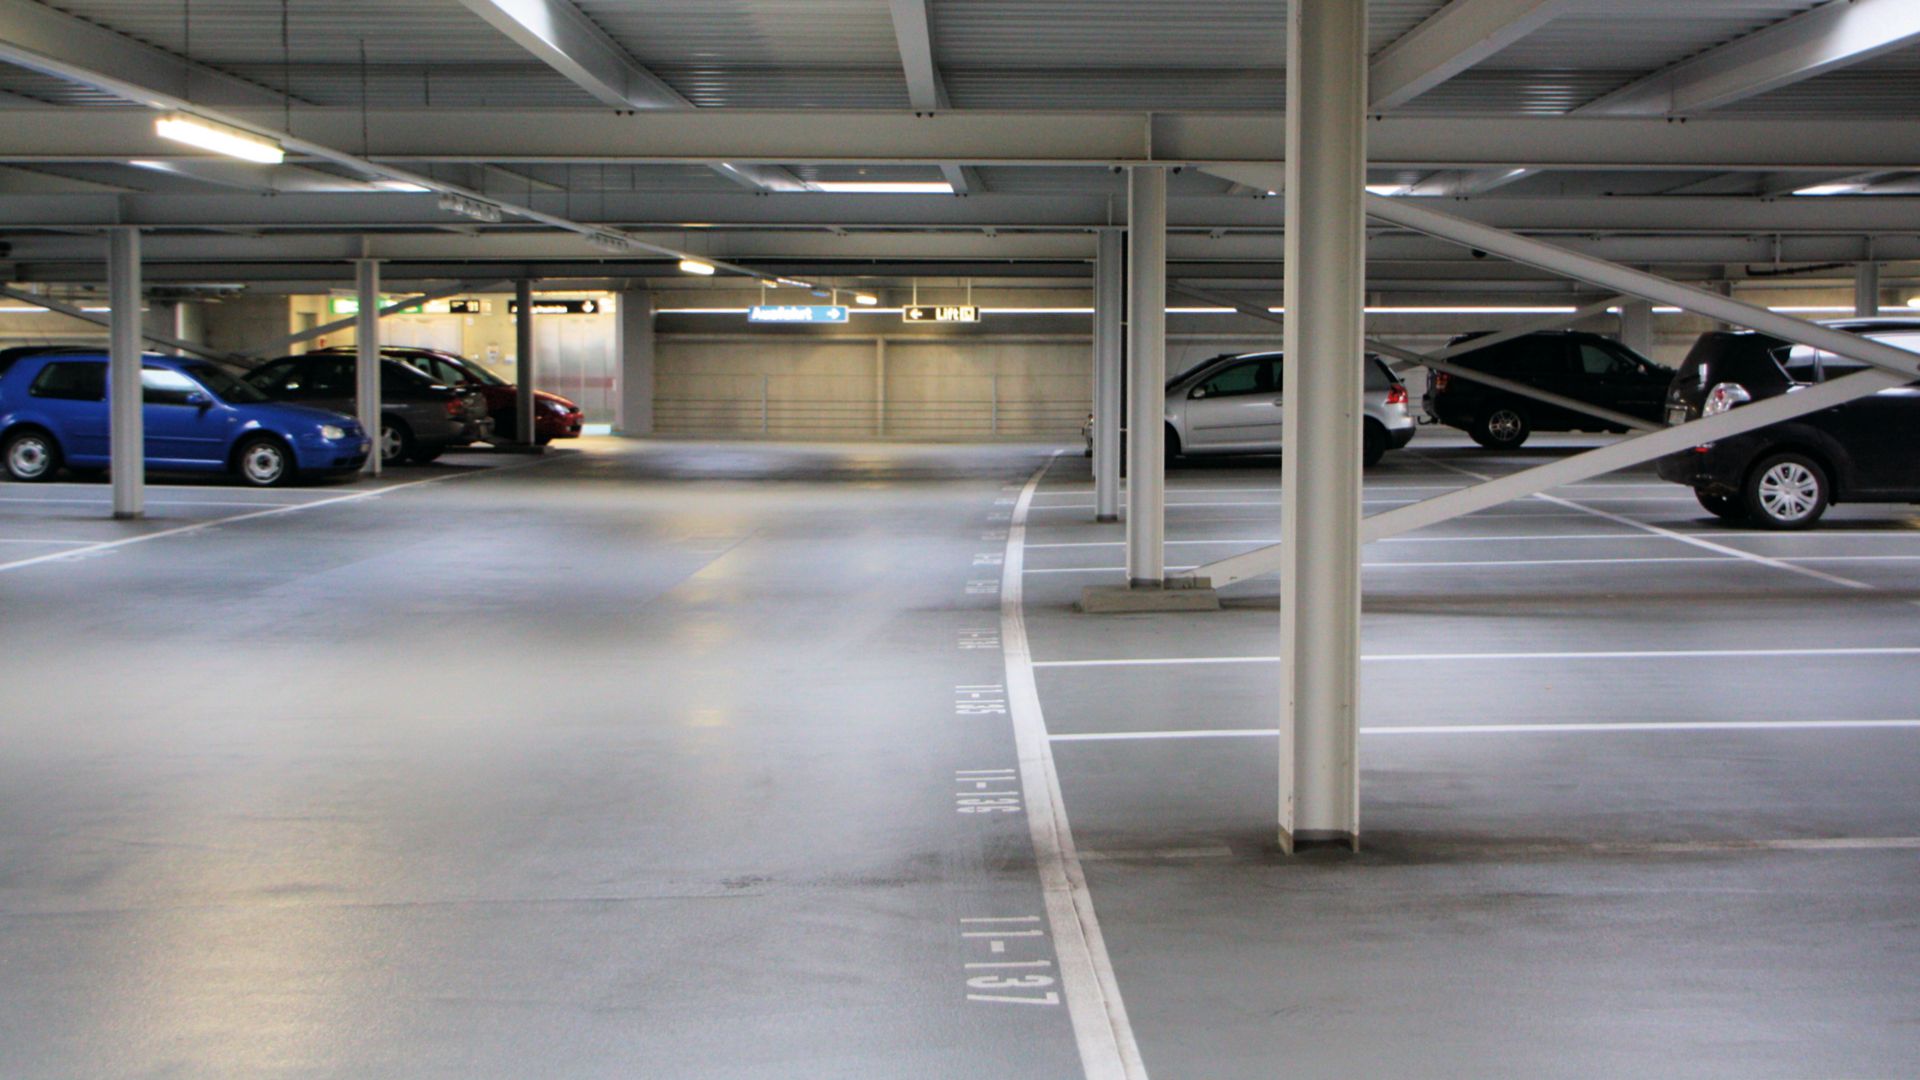 Intermediate deck of a car parking garage